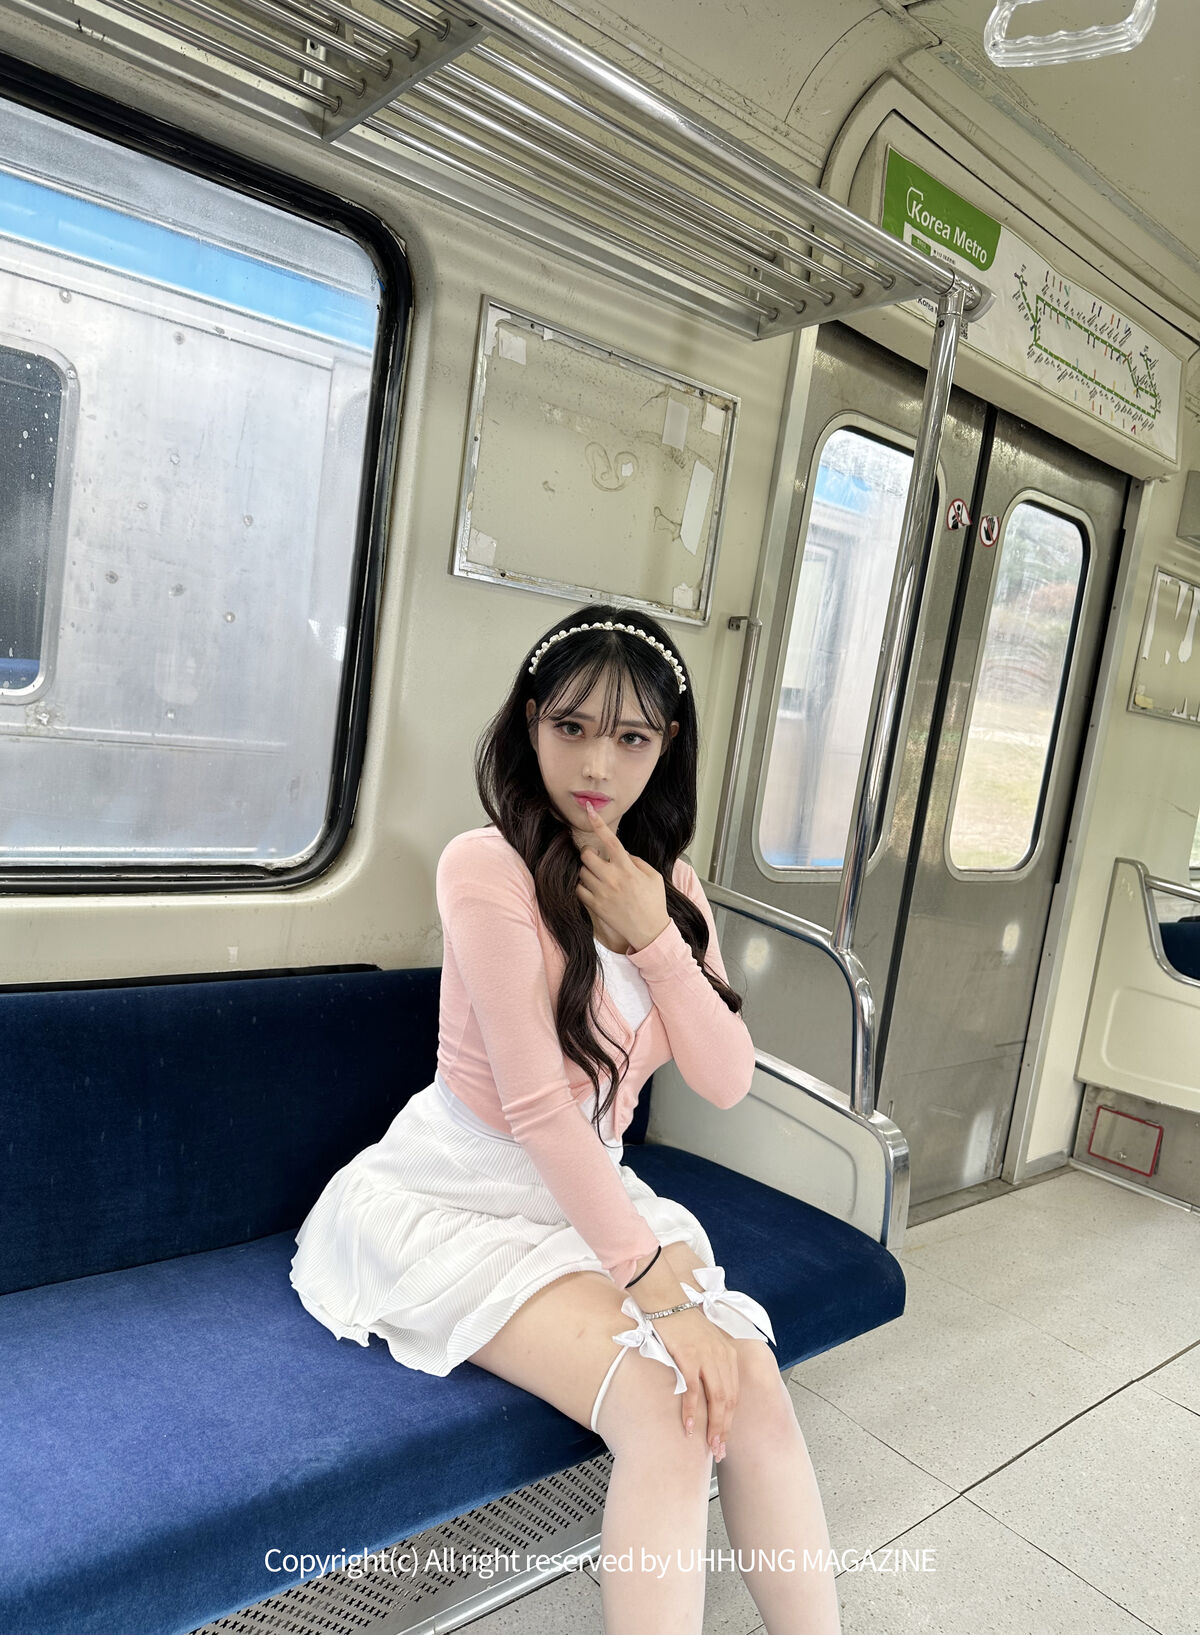 View - UHHUNG MAGAZINE Hani 하니 - The Girlfriend On The Subway Part1 - 